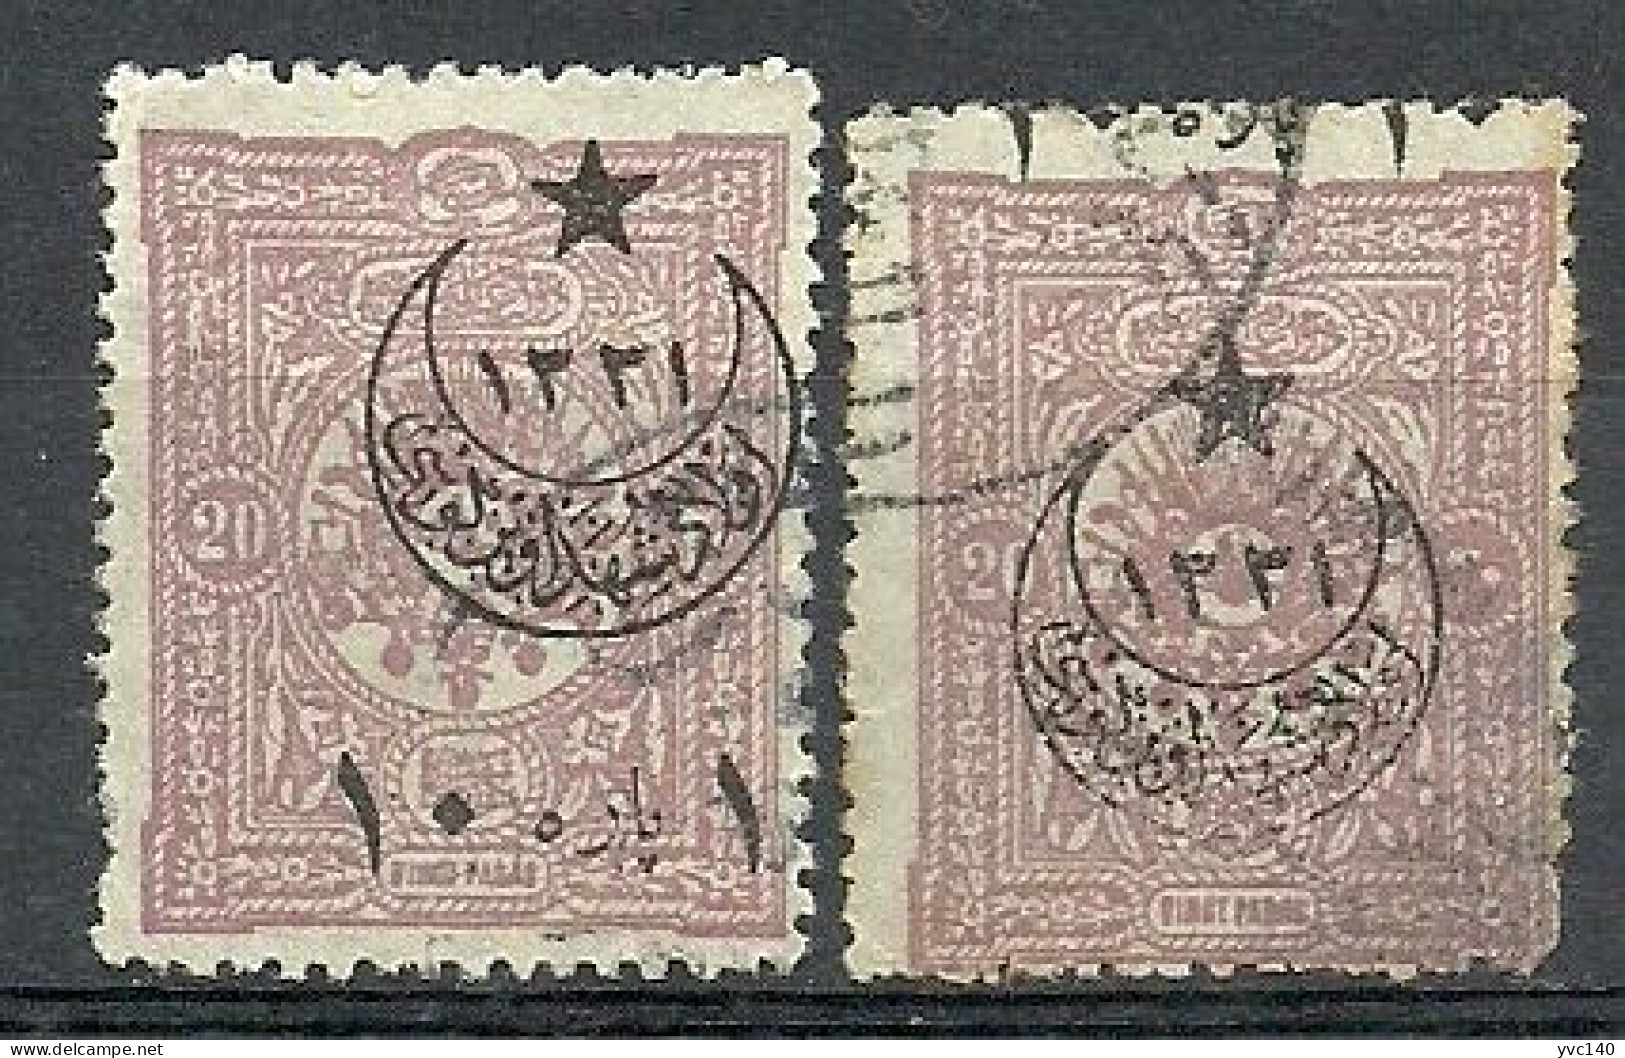 Turkey; 1916 Overprinted War Issue Stamps, ERROR "Shifted Overprint" - Oblitérés